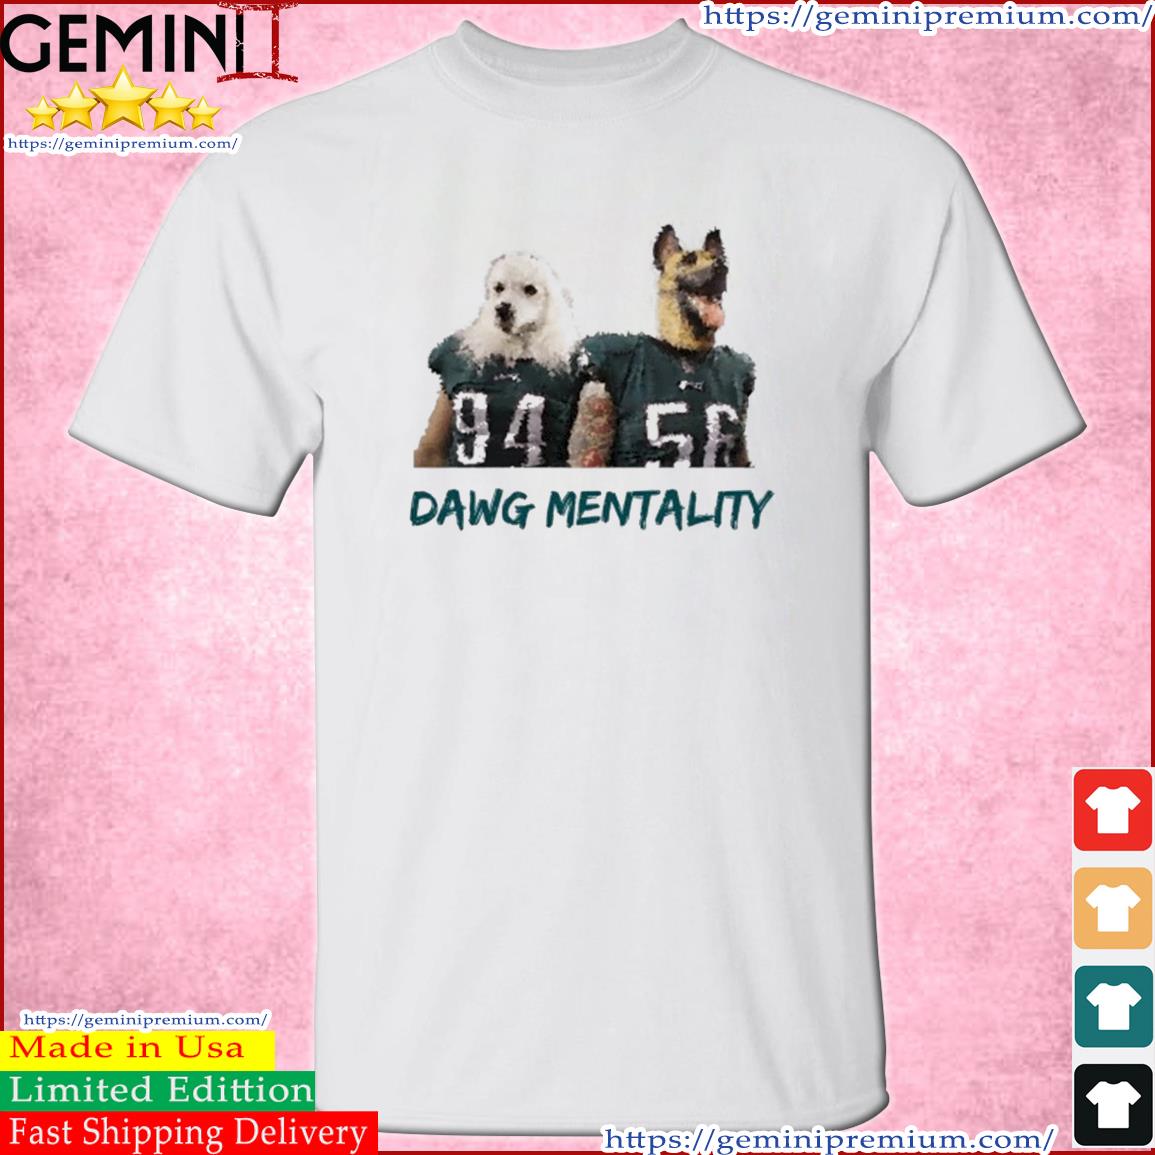 Dawg Mentality - Philadelphia Eagles Shirt